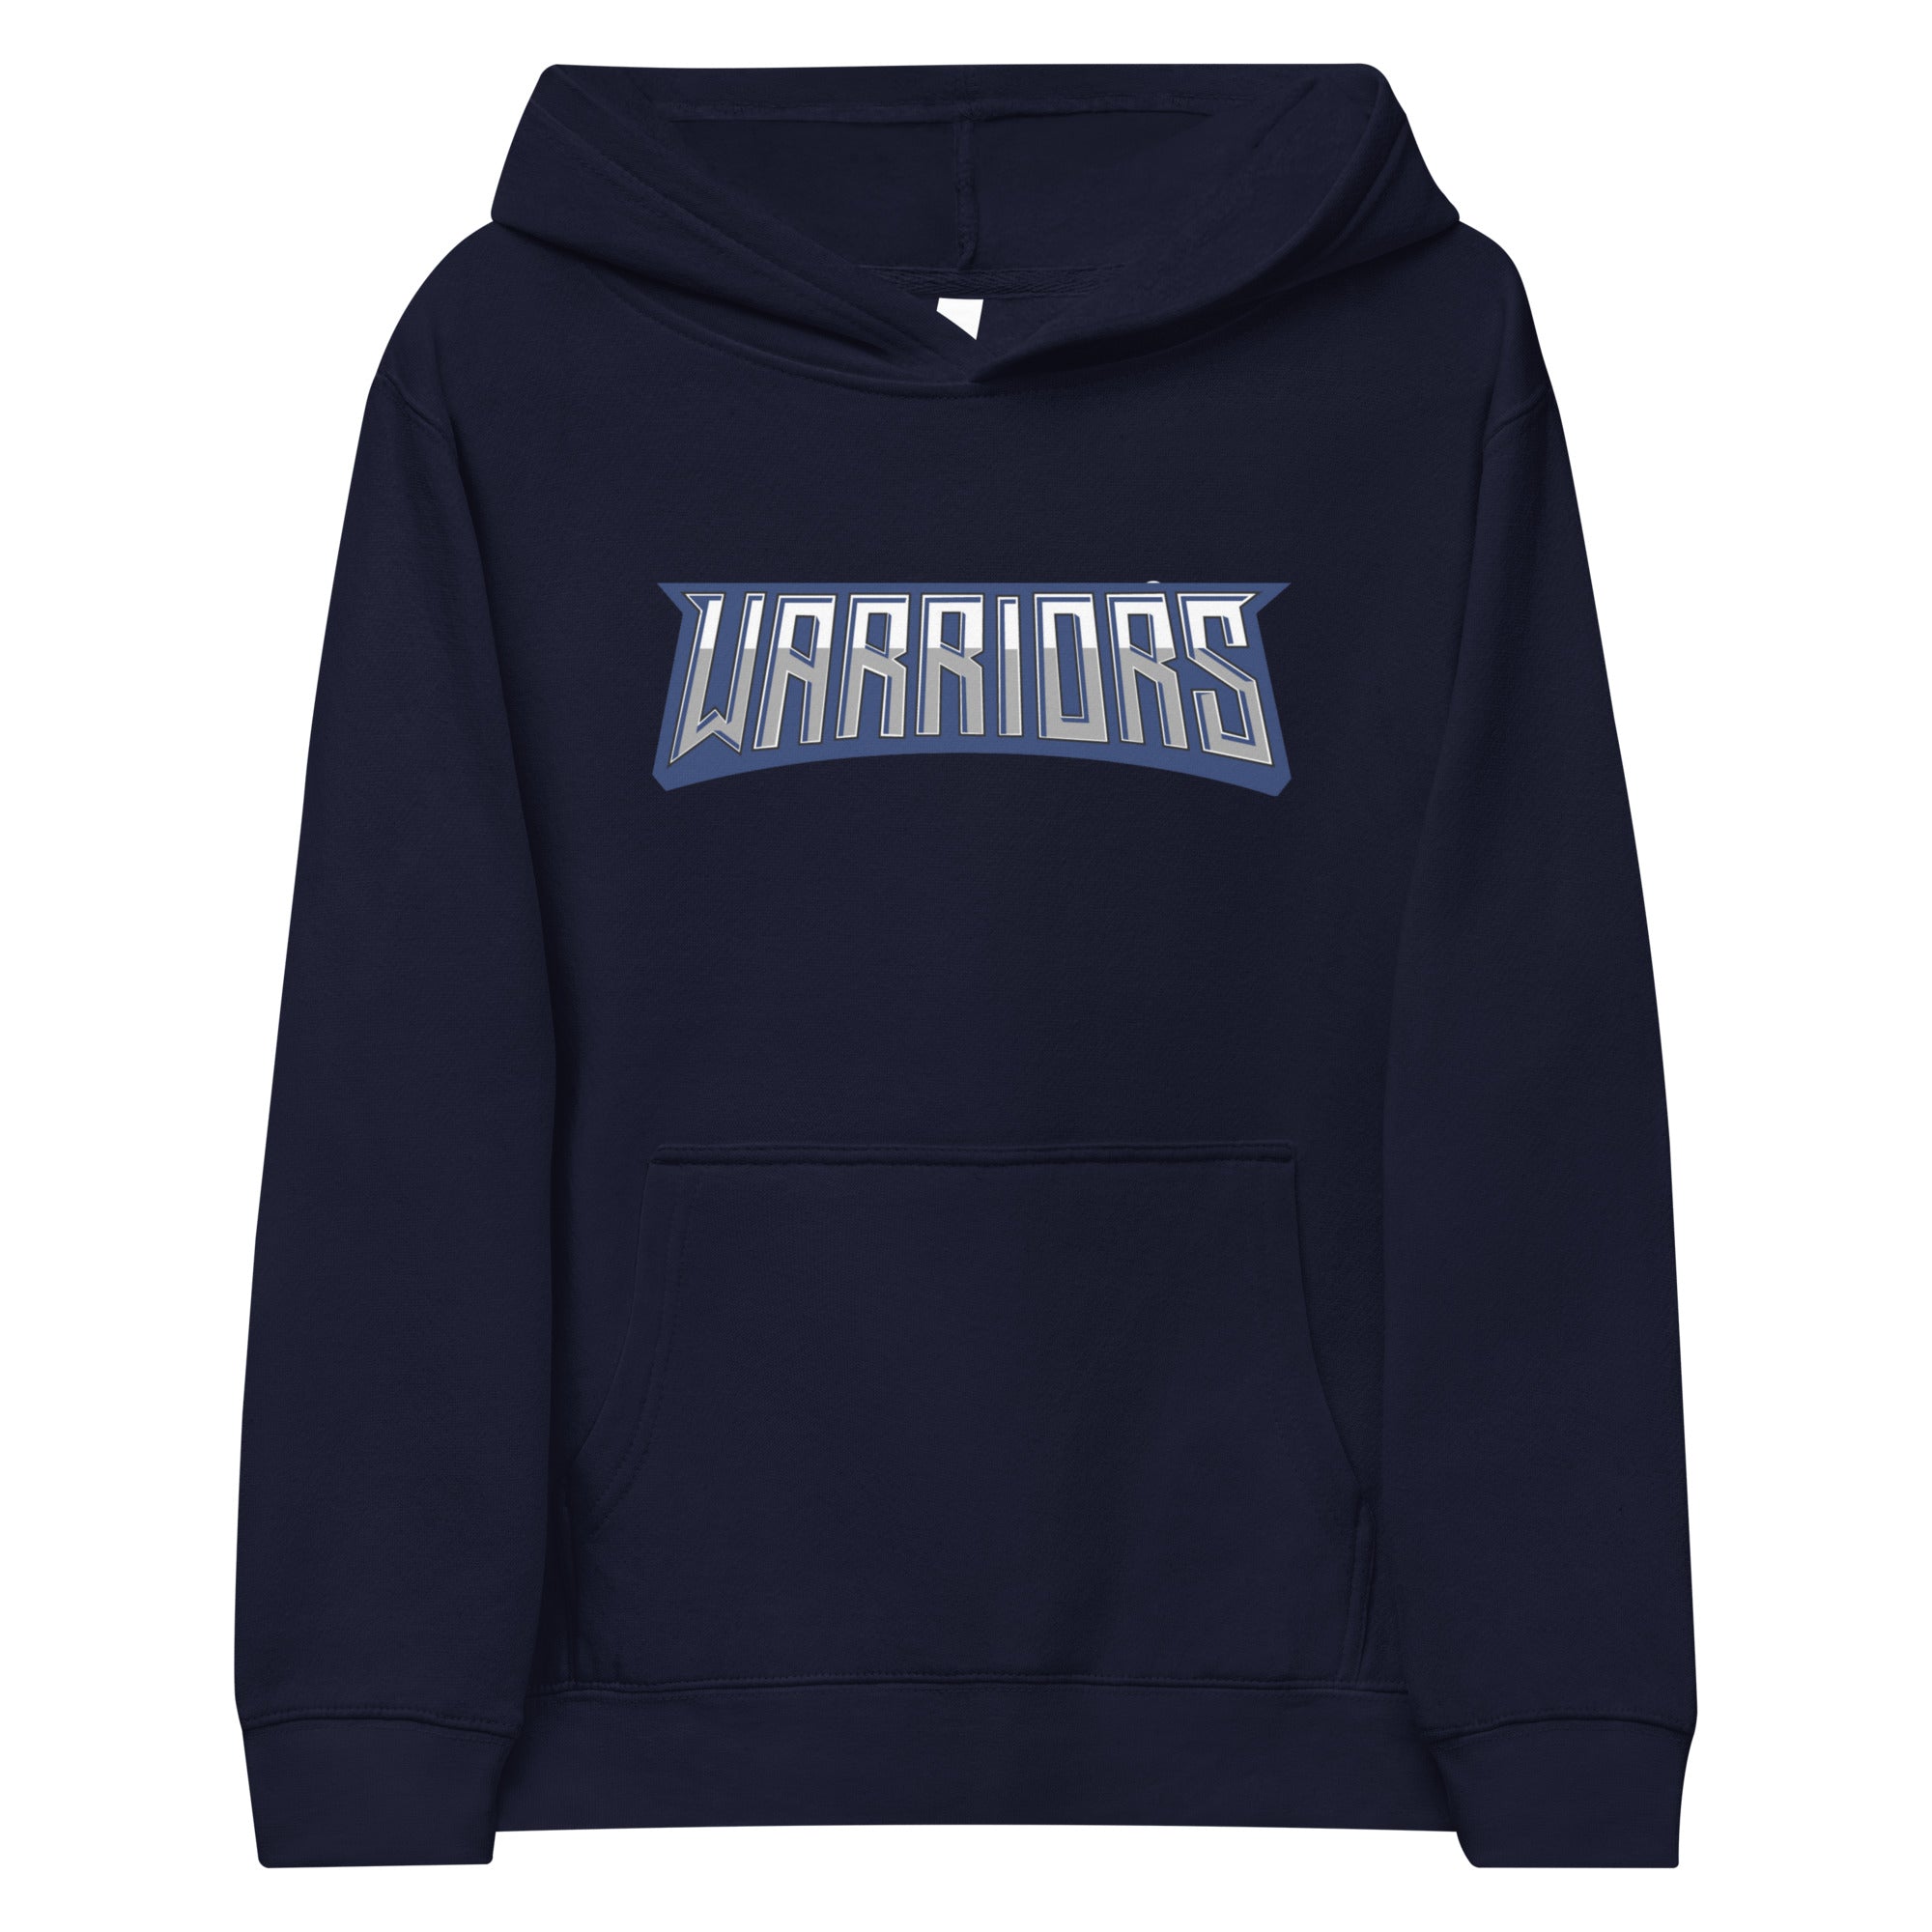 Tampa Warriors Word Seal Kids fleece hoodie